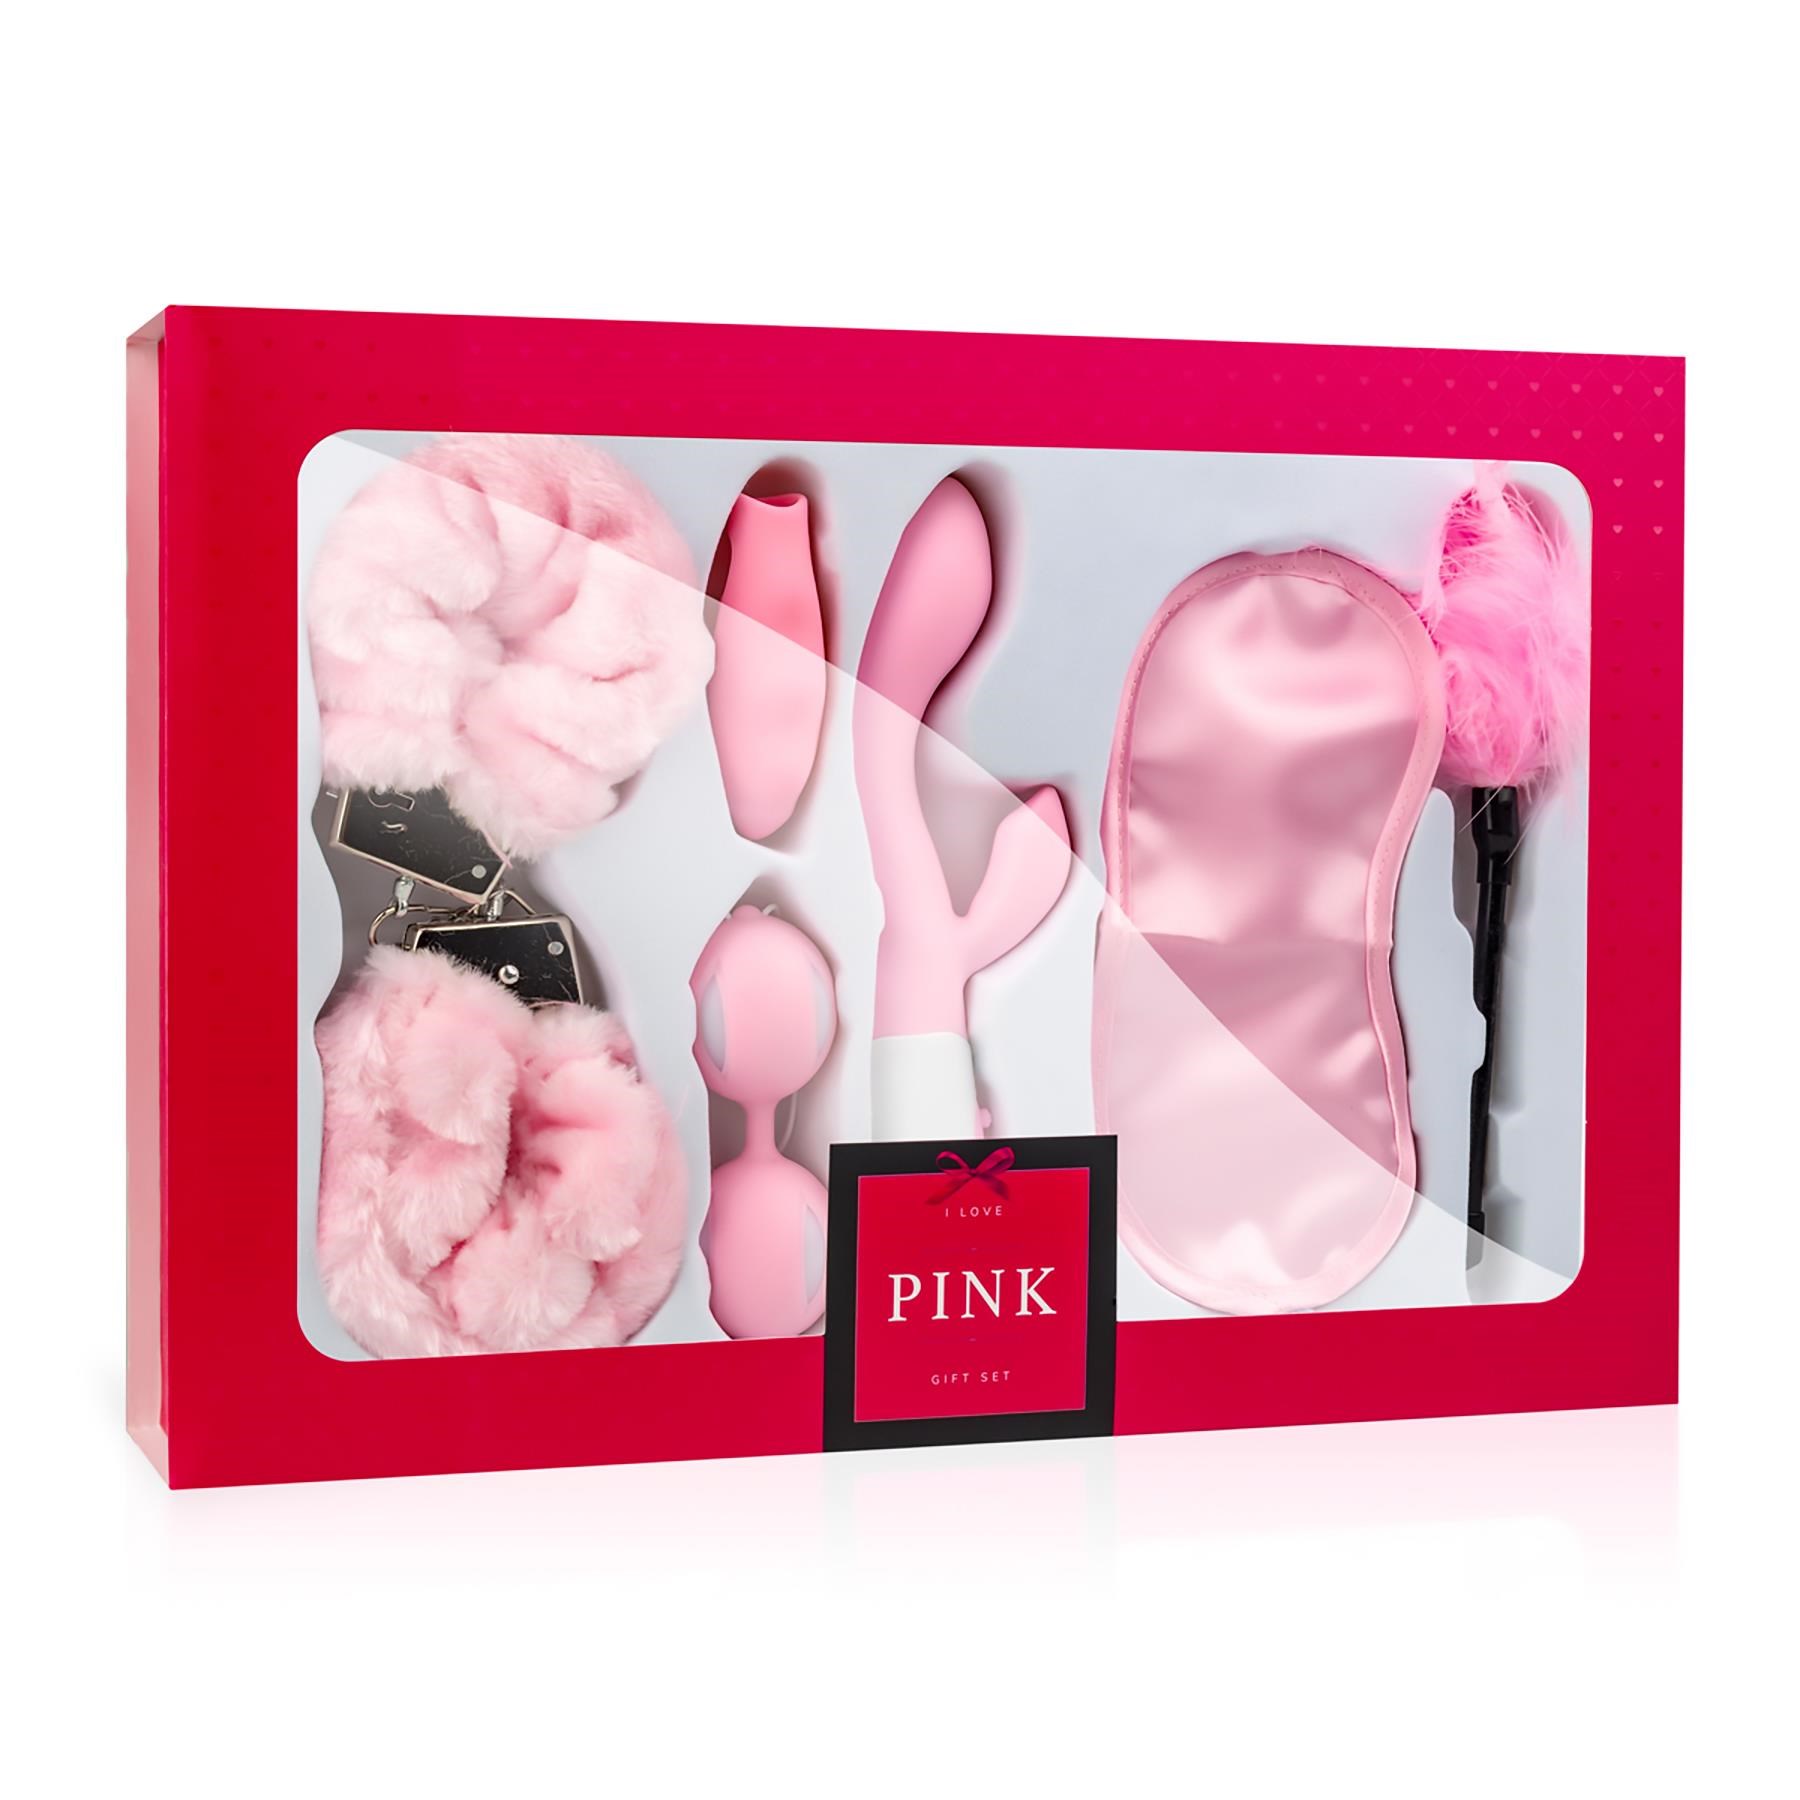 I Love Pink Gift Set - Packaging